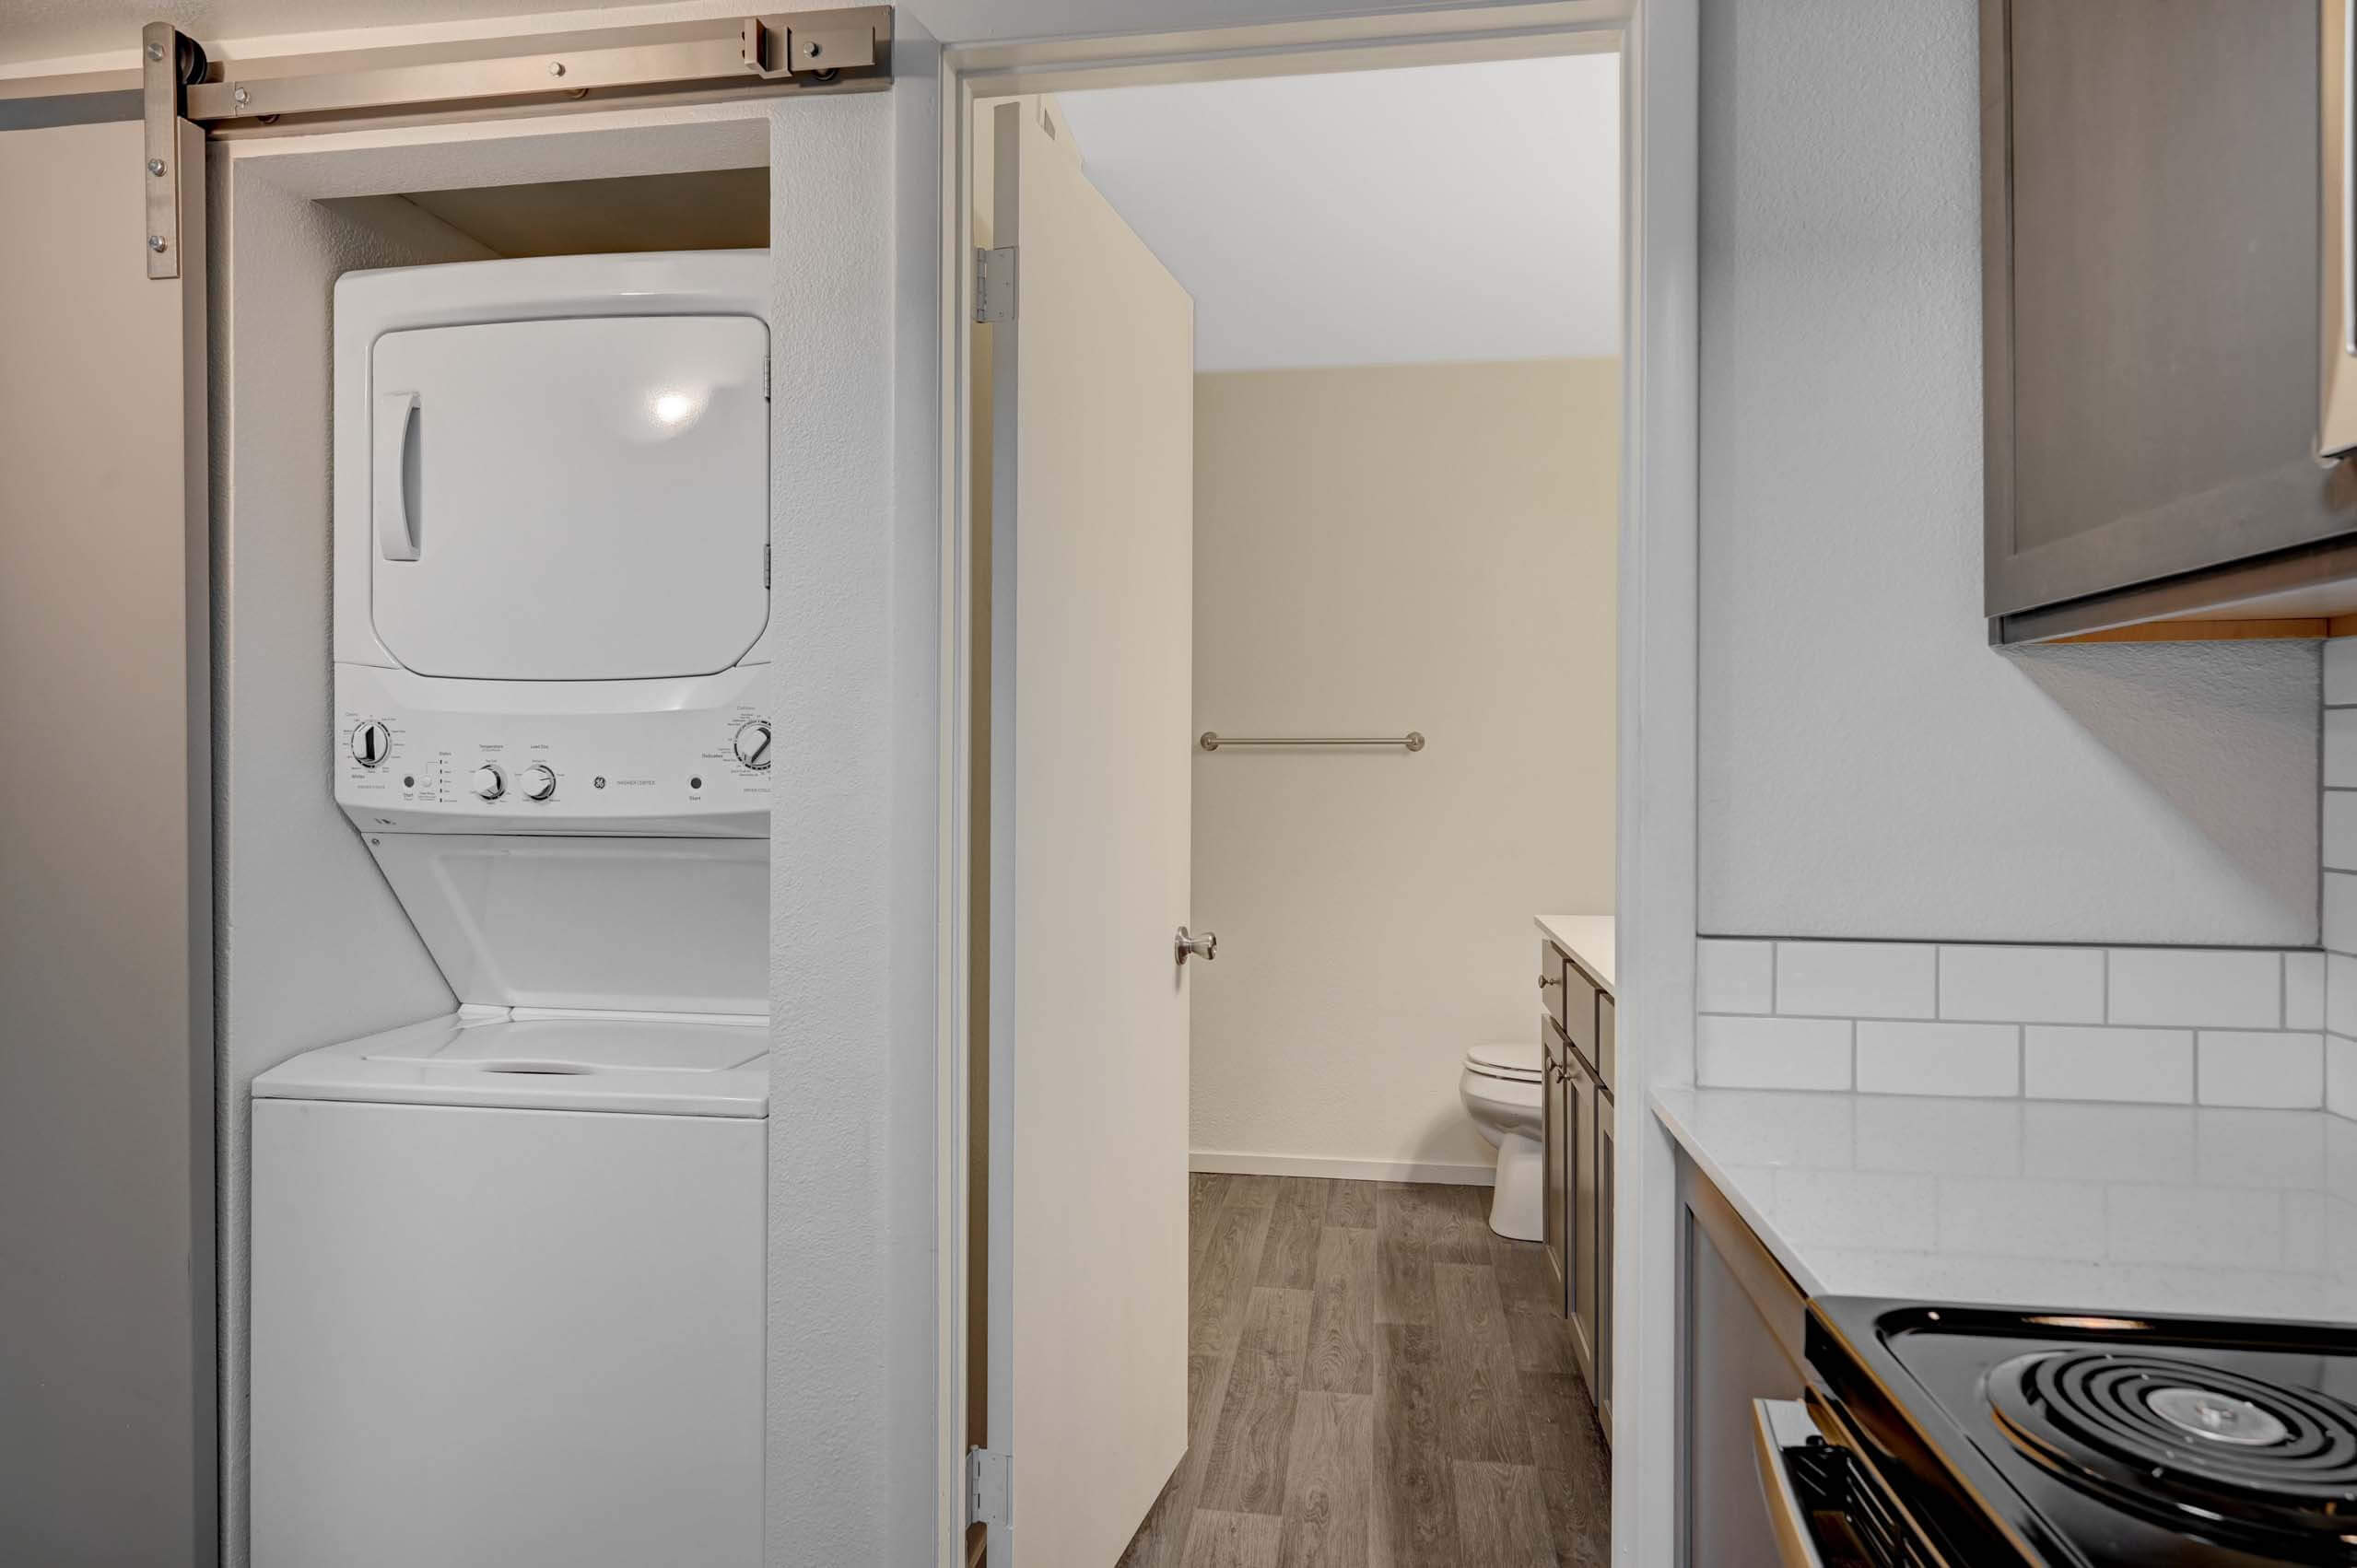 Solstice studio apartment interior - bathroom and washer/dryer